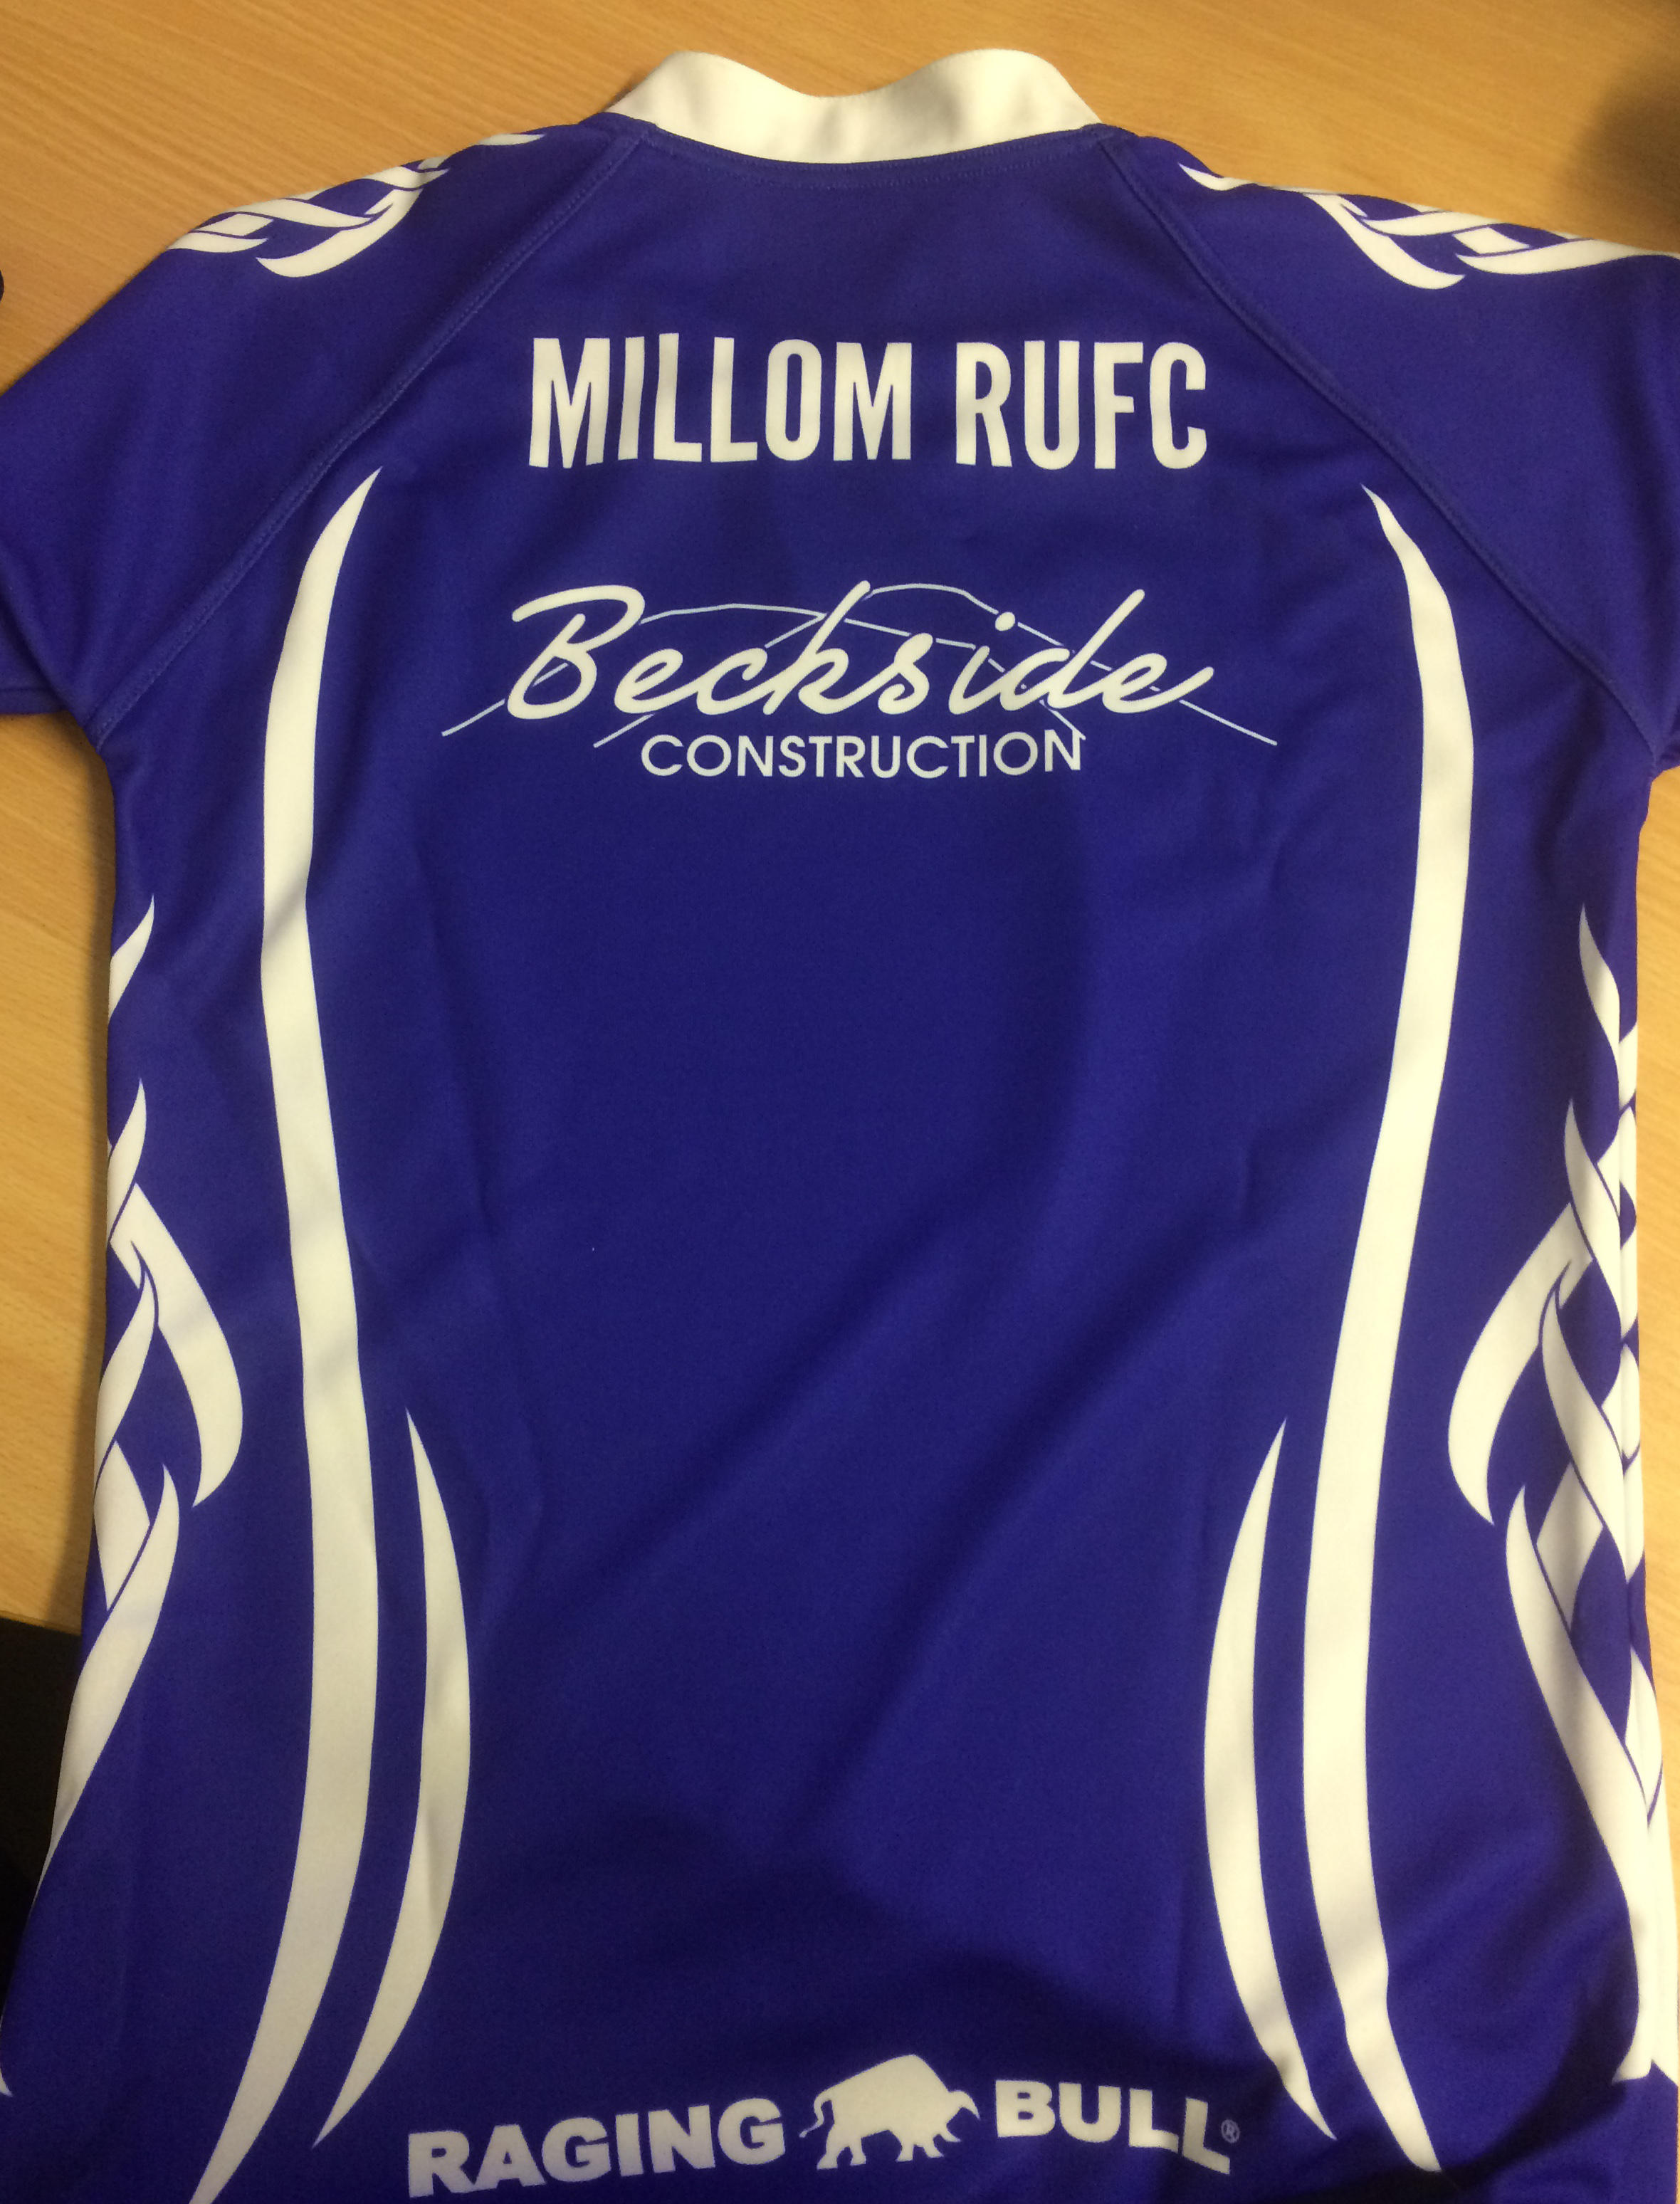 Beckside Construction Sponsorship Back of Shirt